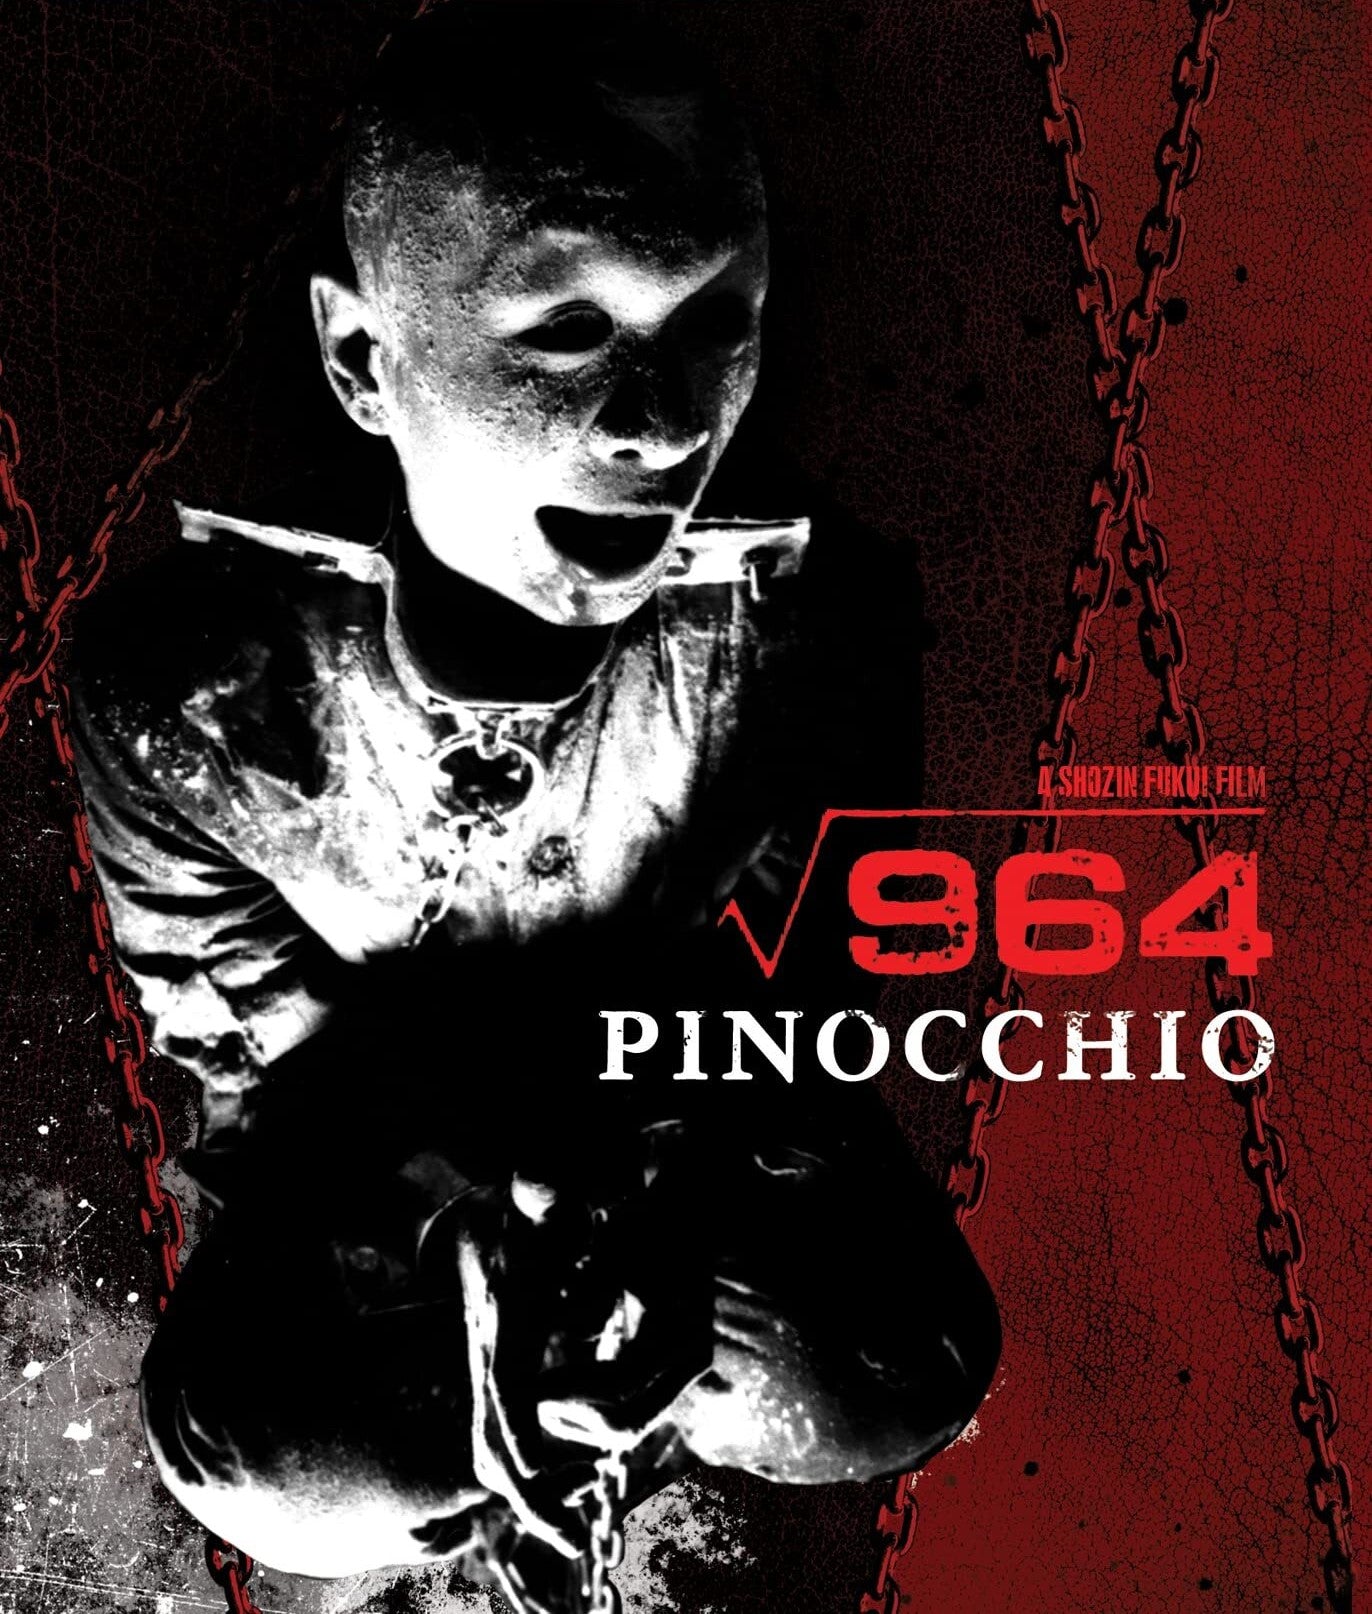 PINOCCHIO 964 BLU-RAY